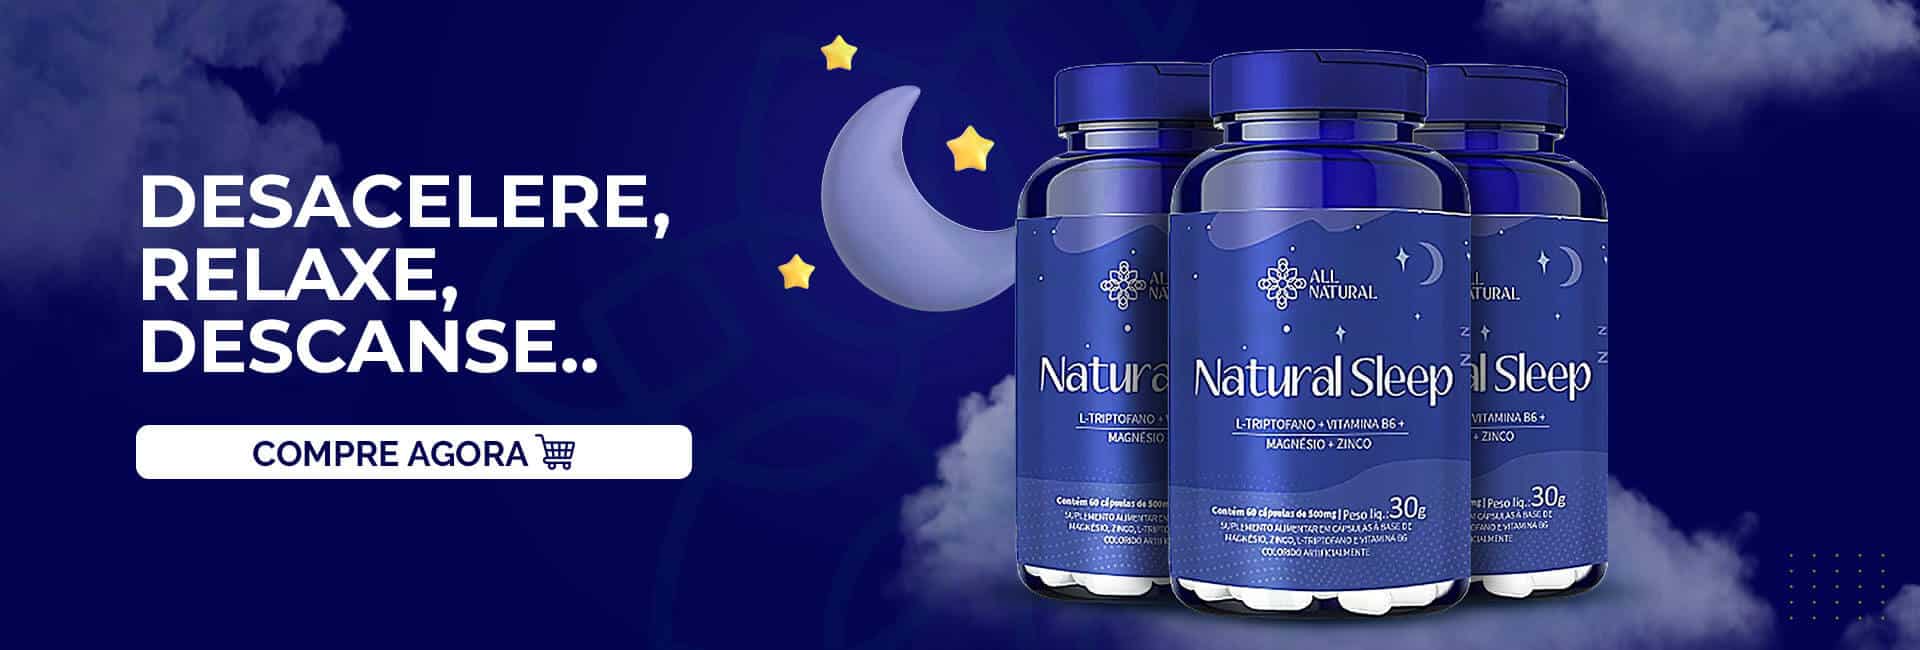 Natural Sleep para promover uma noite de sono perfeita